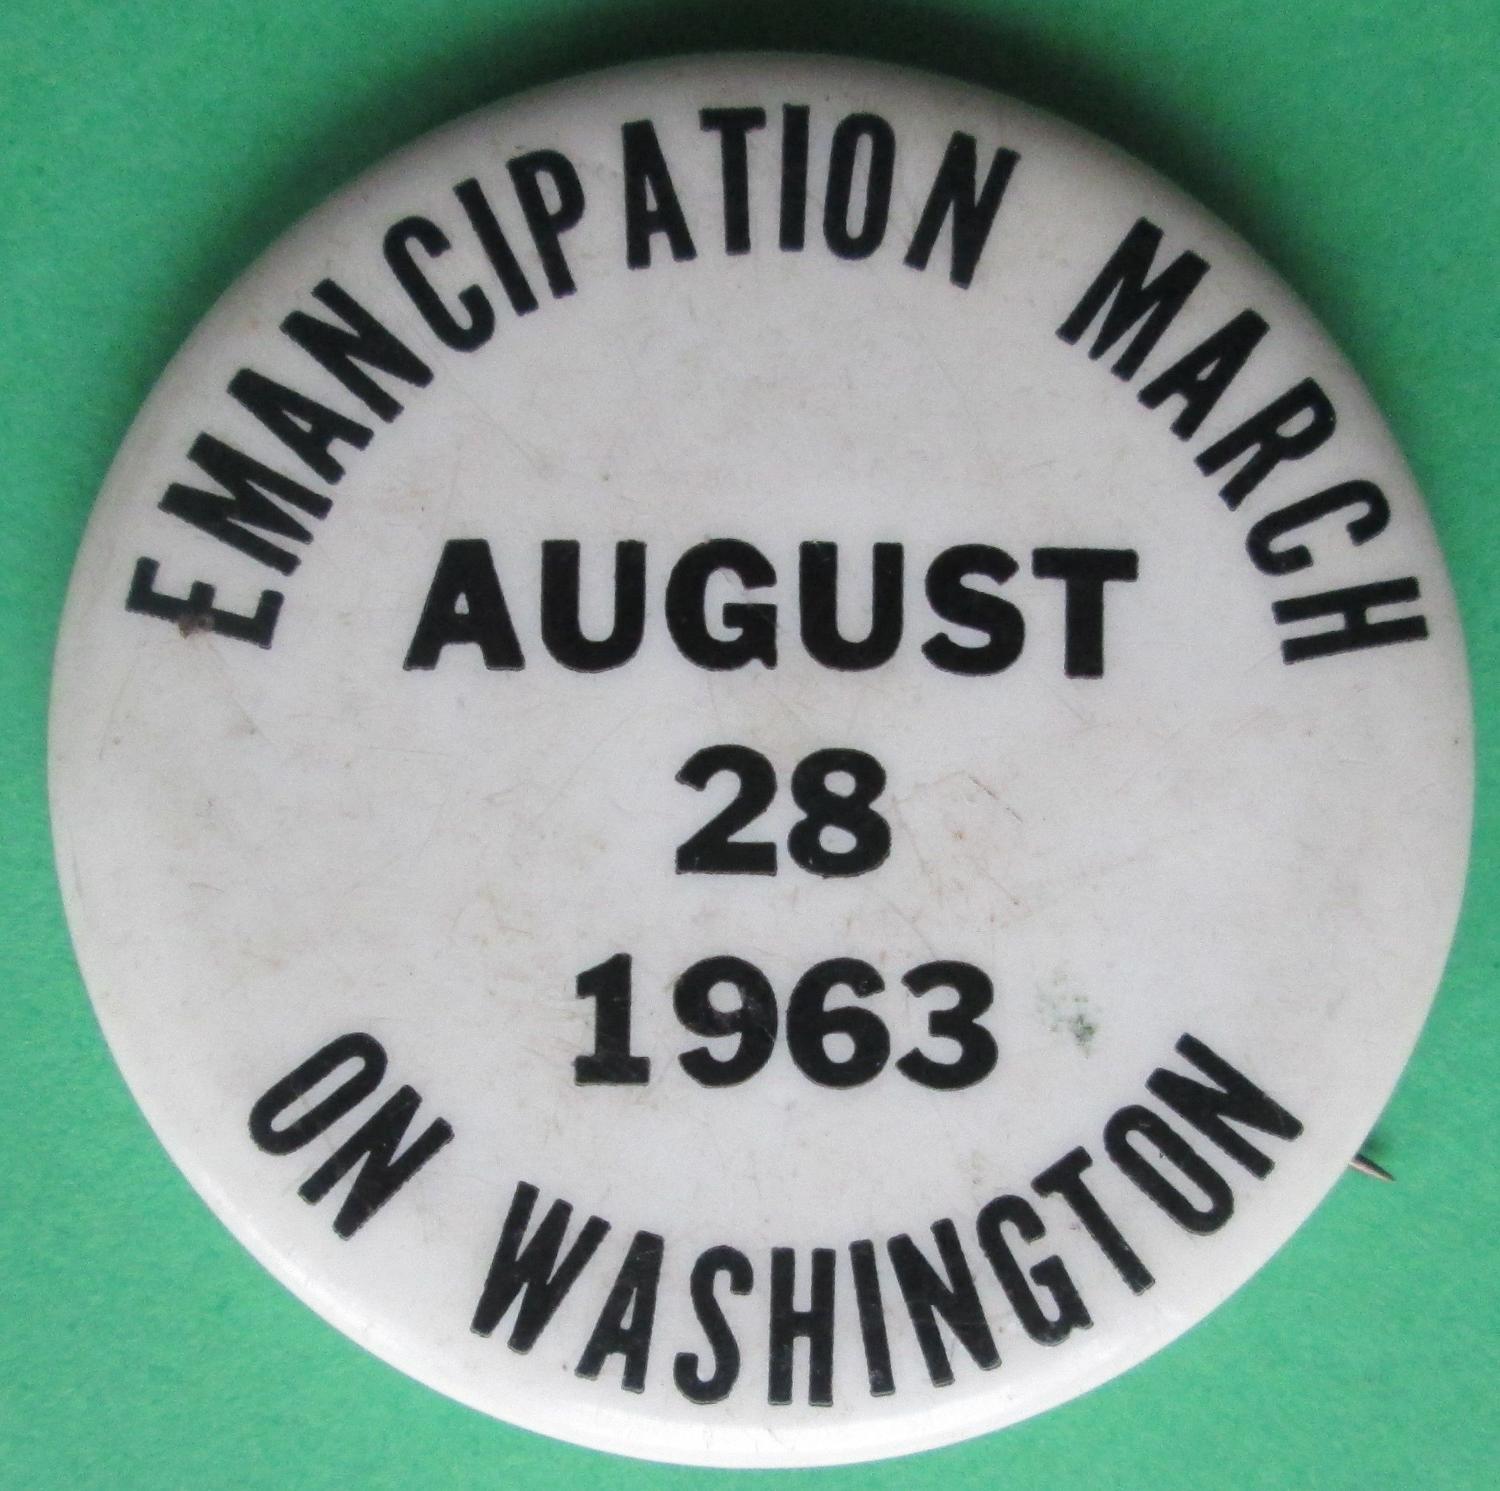 THE EMANCIPATION MARCH ON WASHINGTON LARGE SIZE PIN BADGE